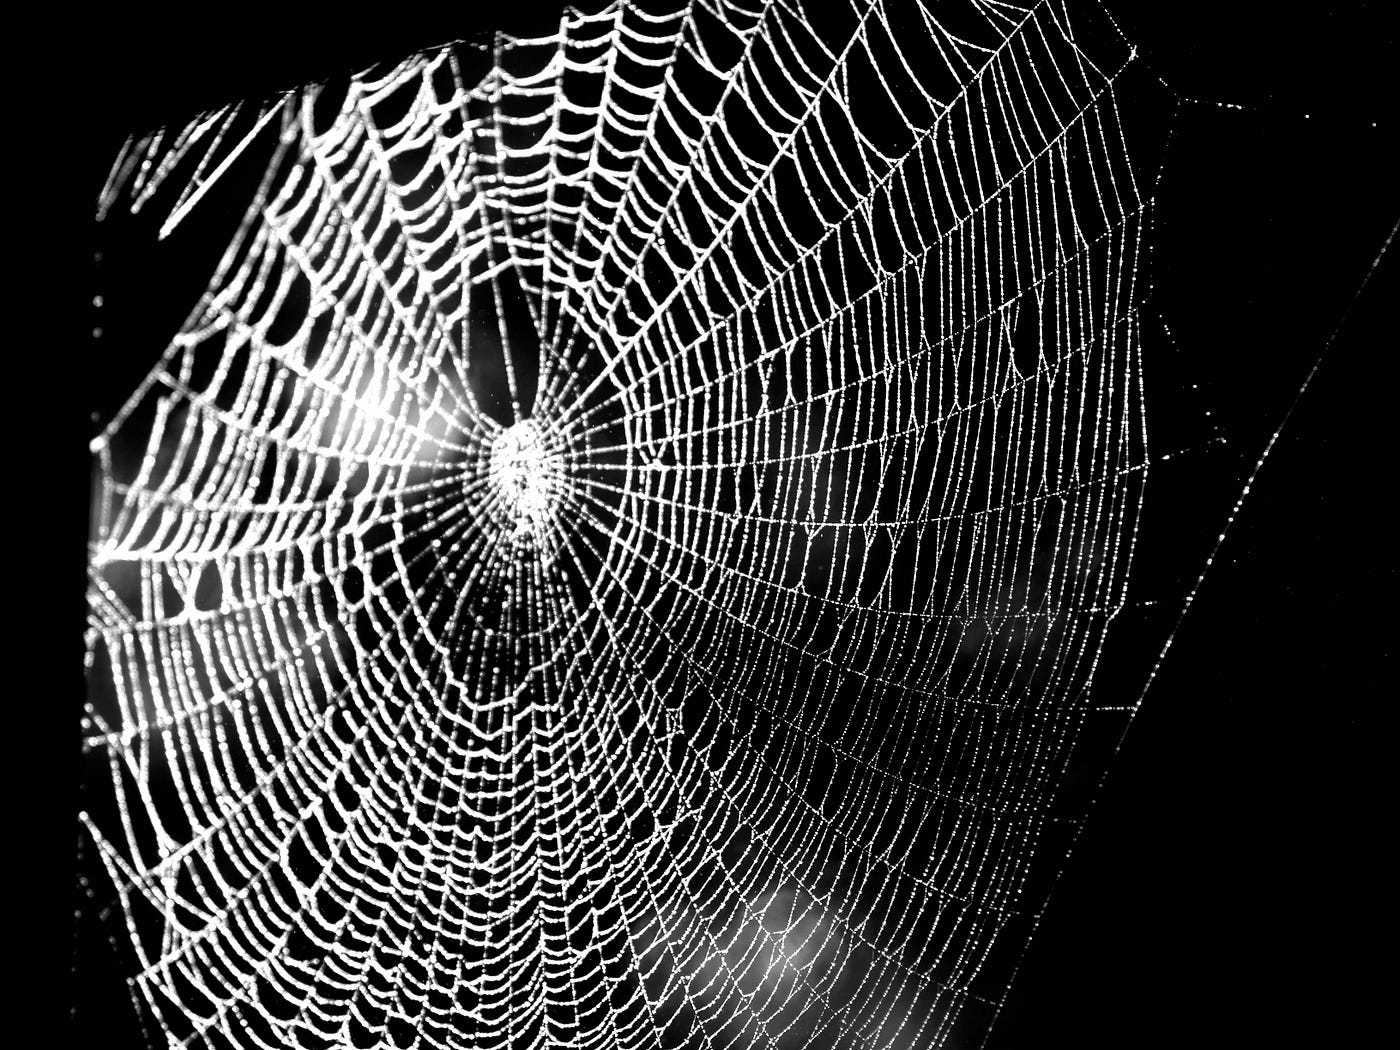 Priest Shares Wisdom Found in a Spider's Web